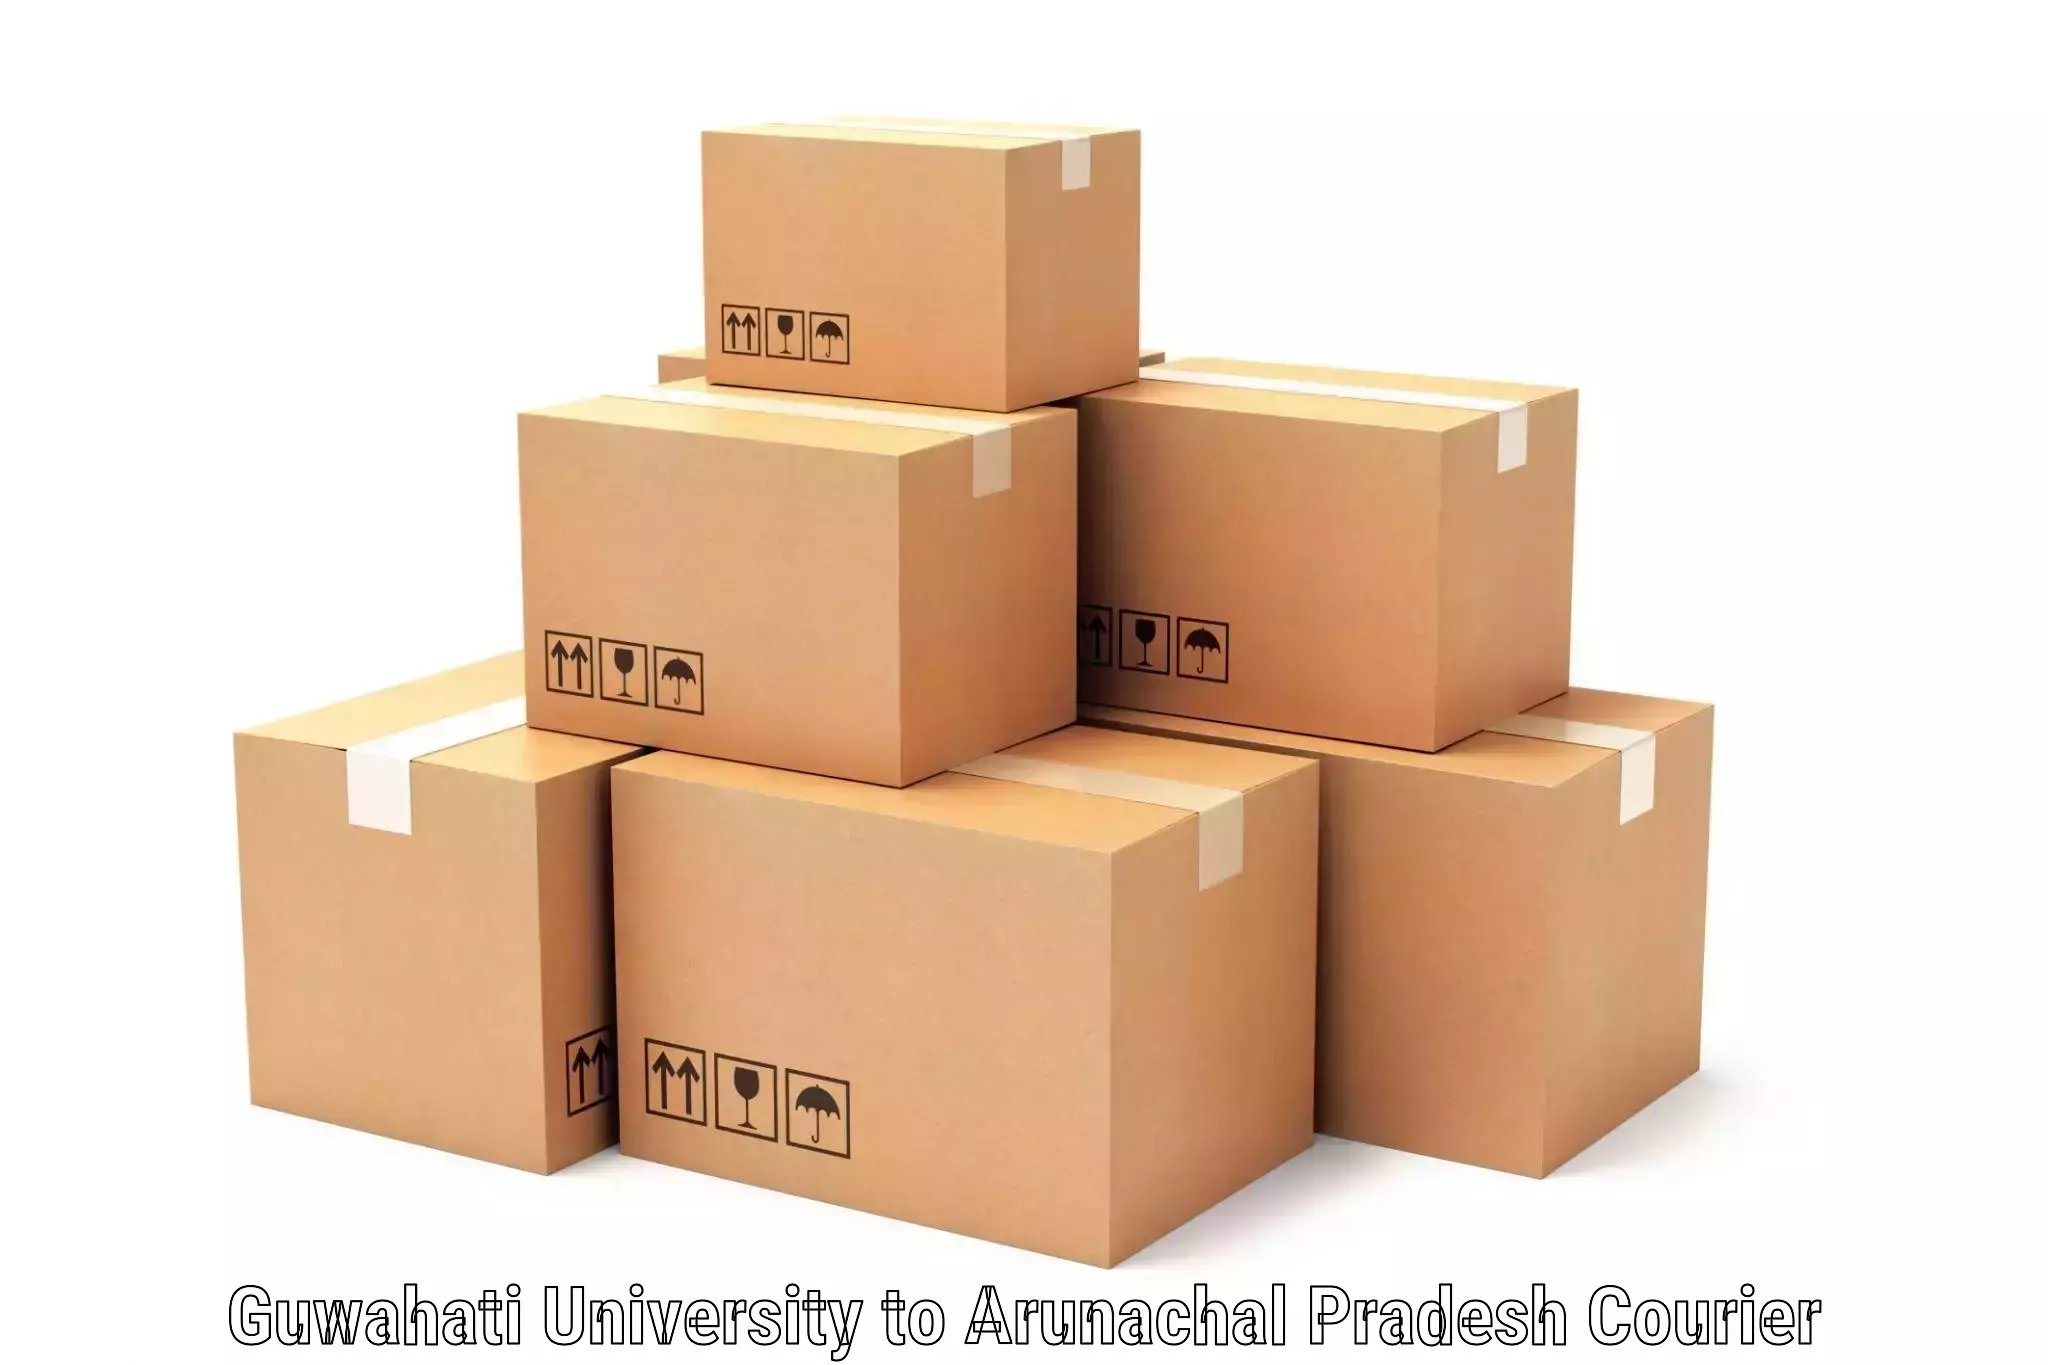 Reliable freight solutions in Guwahati University to Arunachal Pradesh